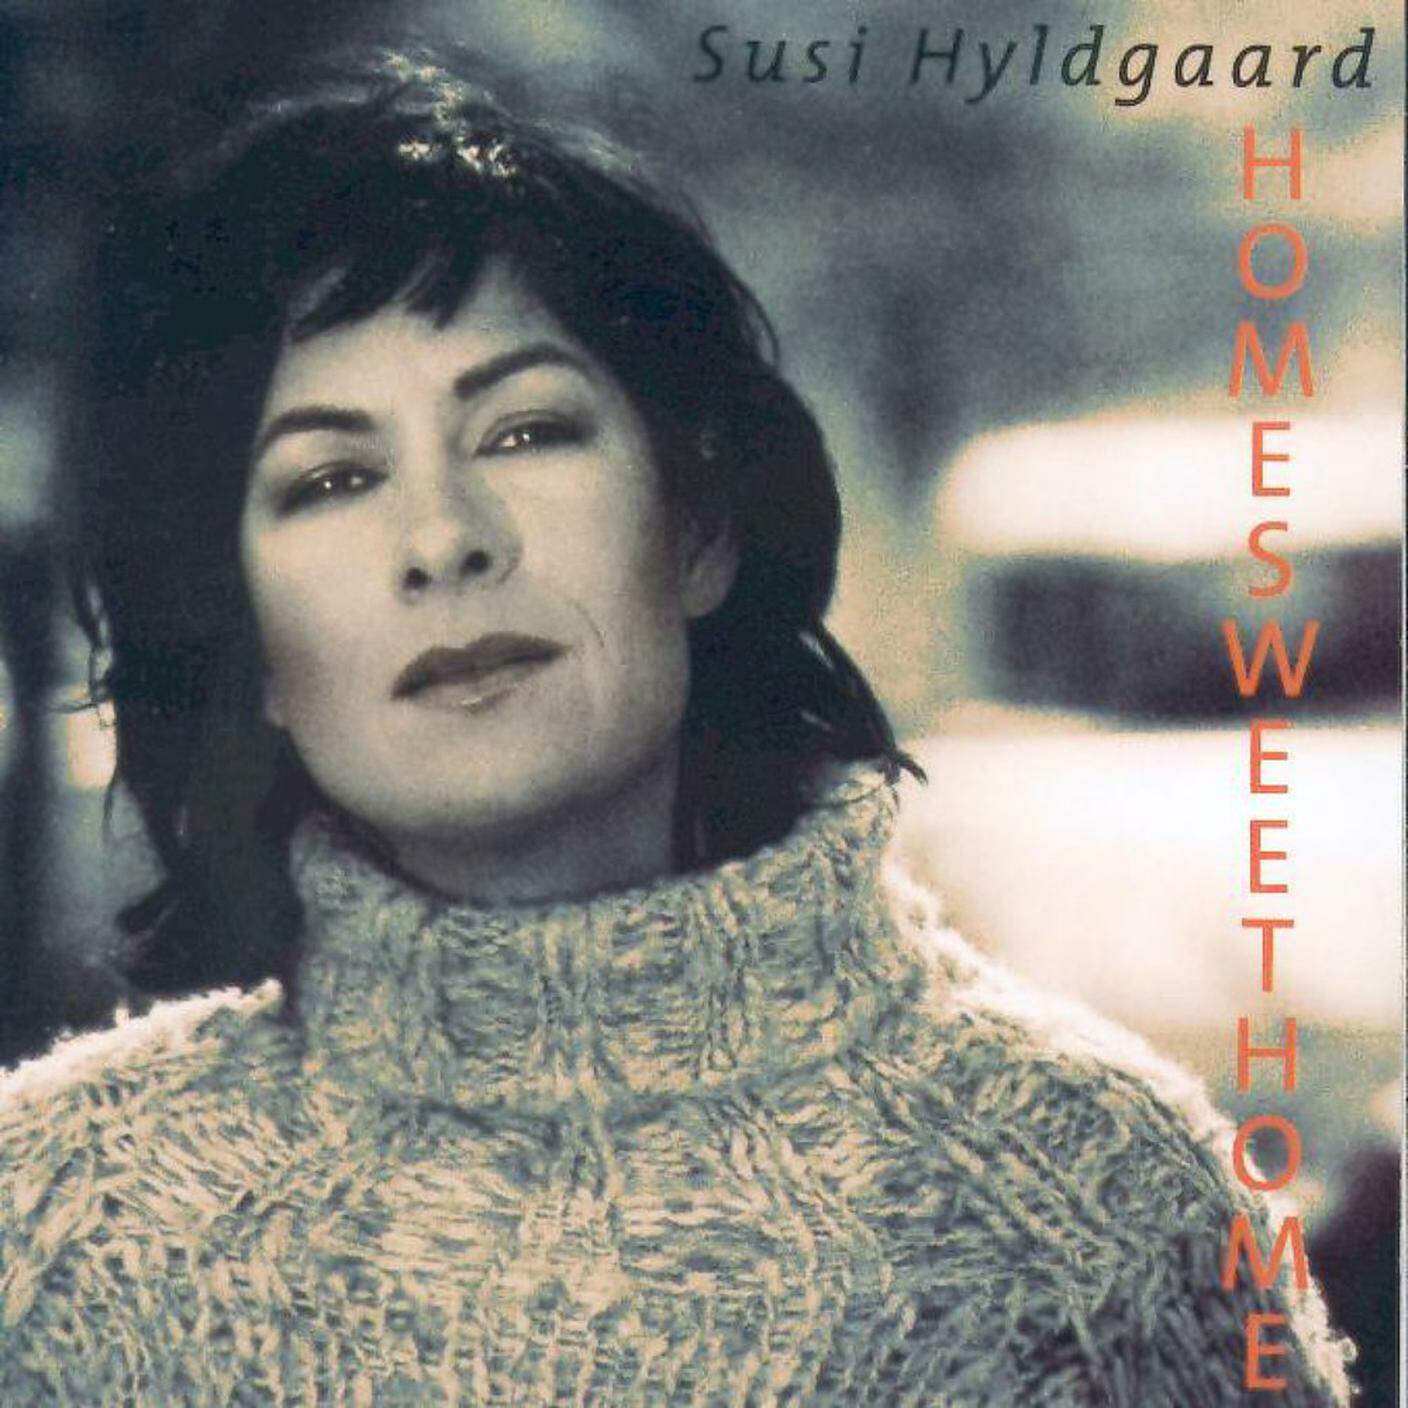 Susi Hyldgaard; "Sex is out of question"; Naïve (dettaglio copertina)